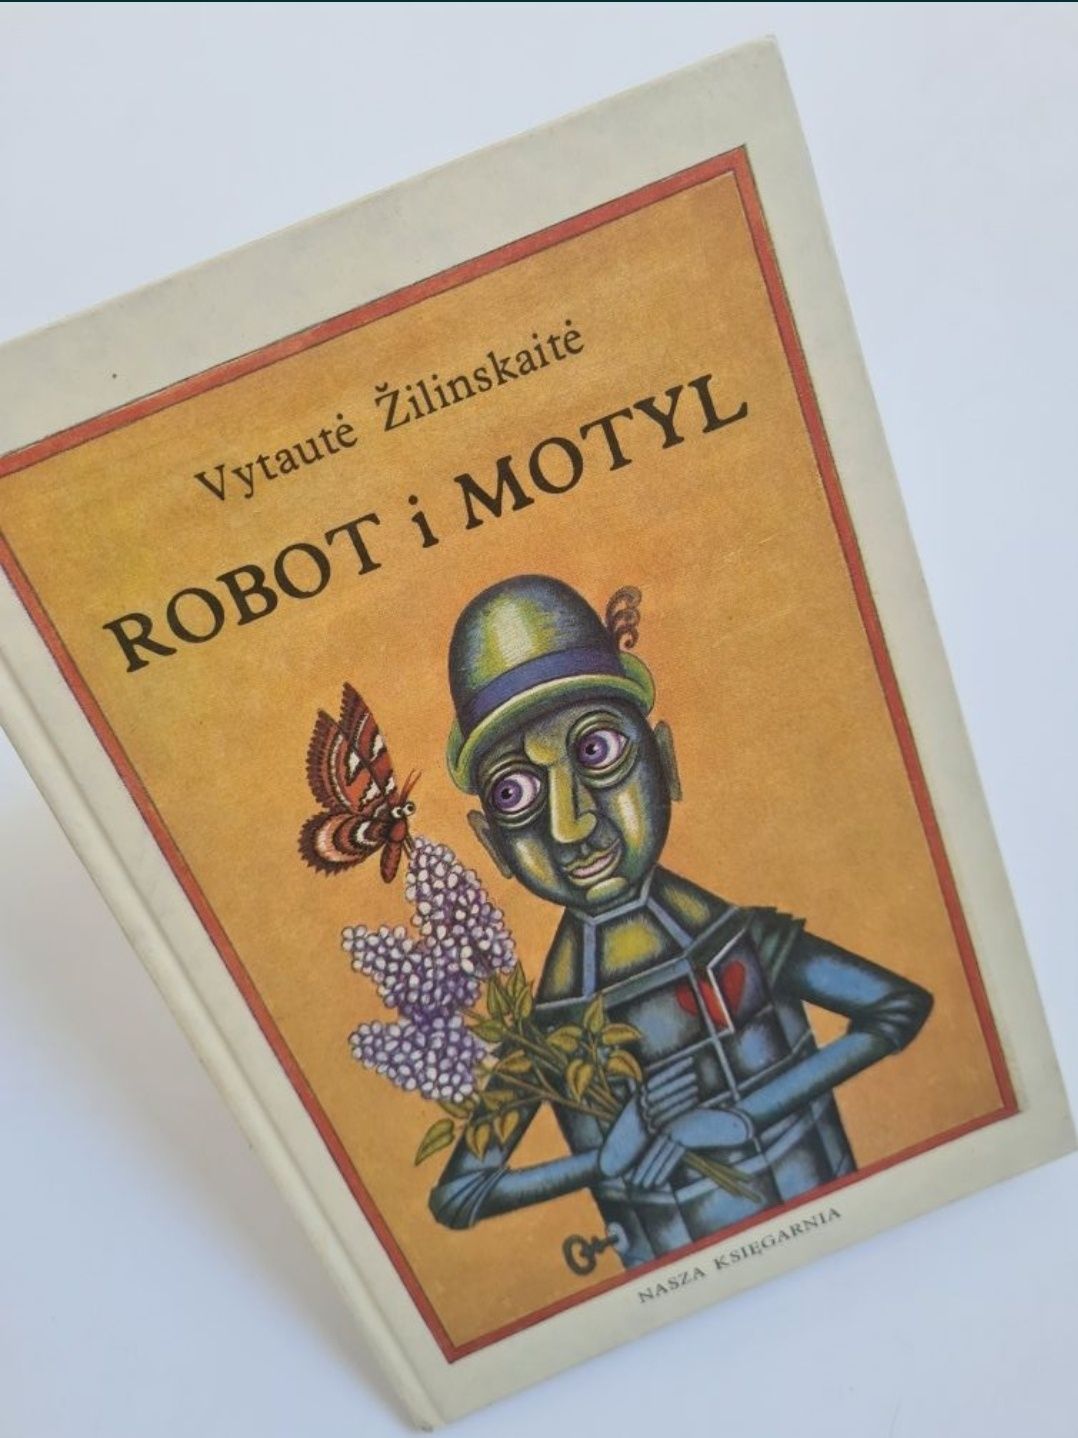 Robot i motyl - Vytautė Žilinskaitė. Książka